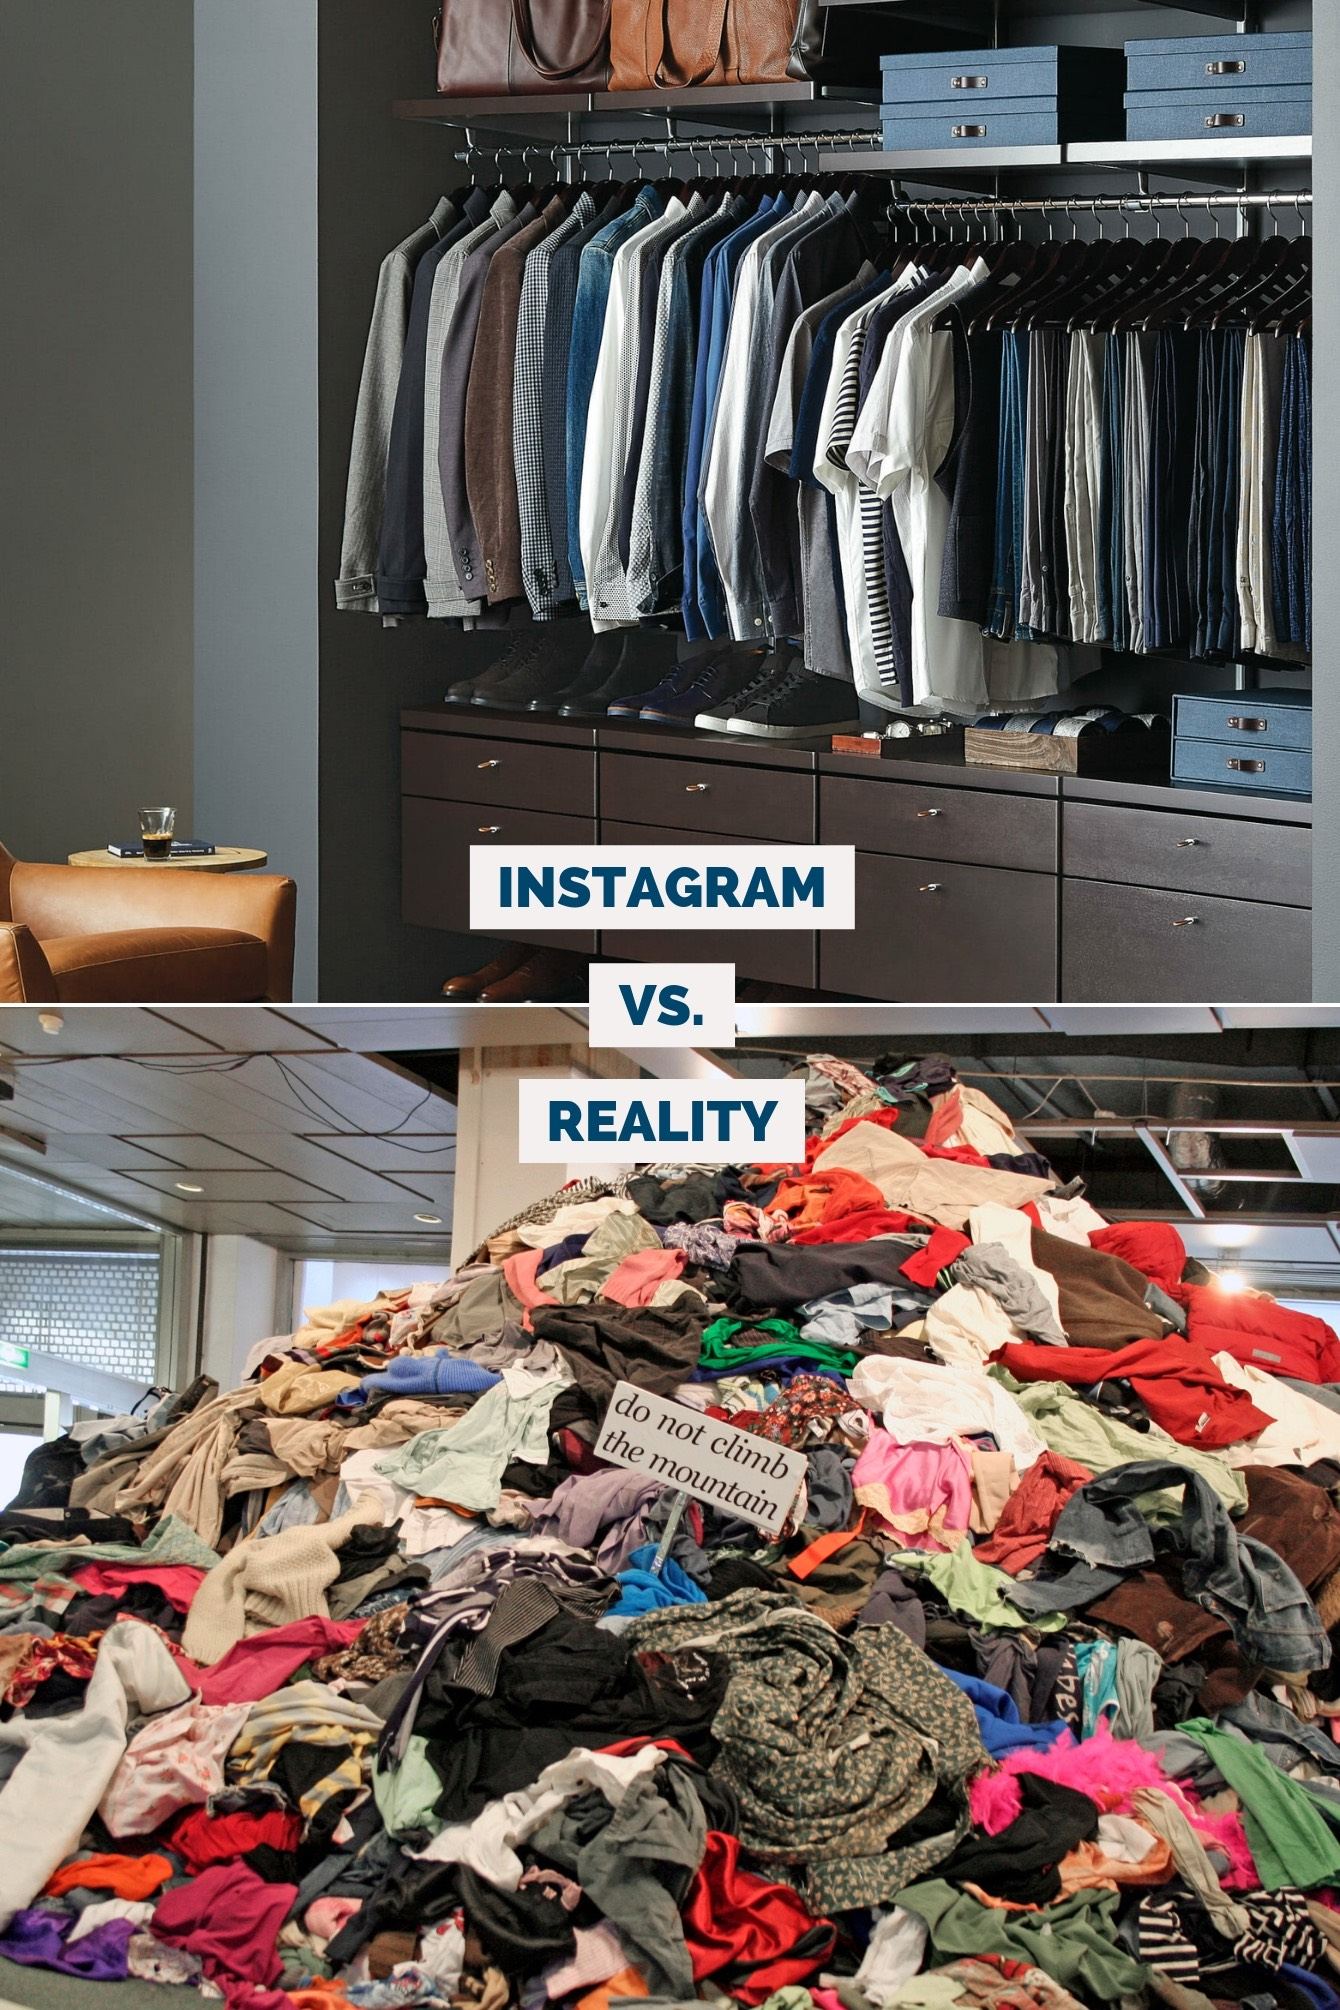 Organized closet vs. pile of clothes